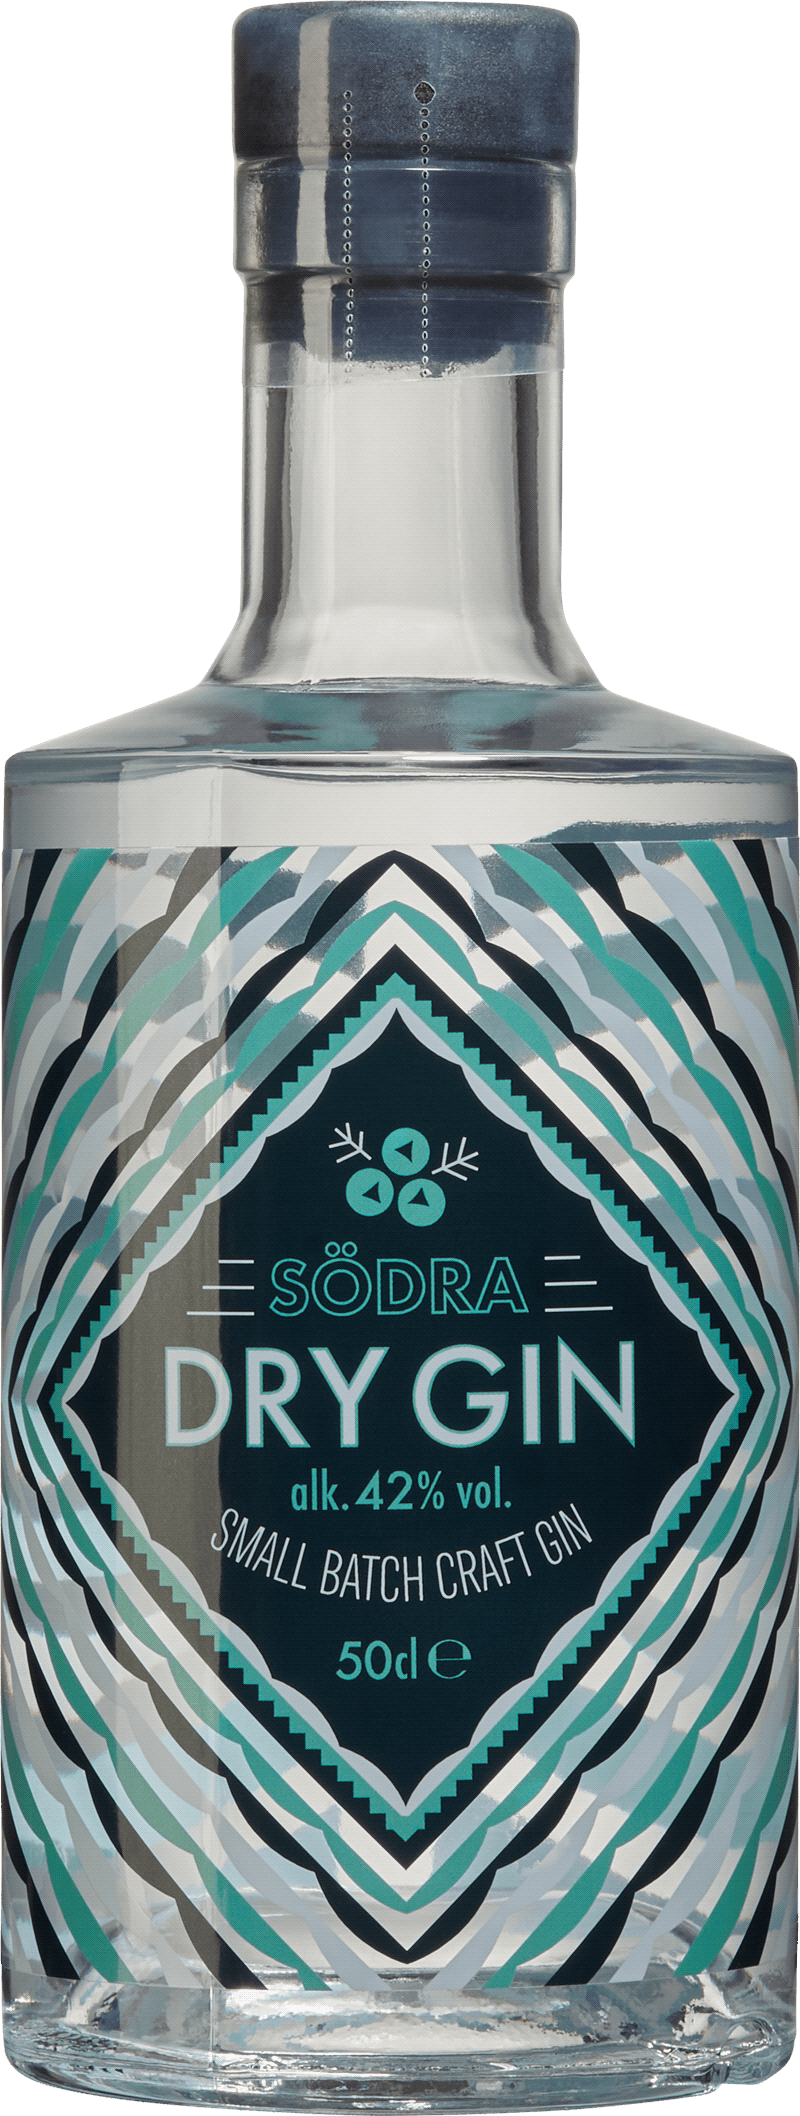 Södra Dry Gin